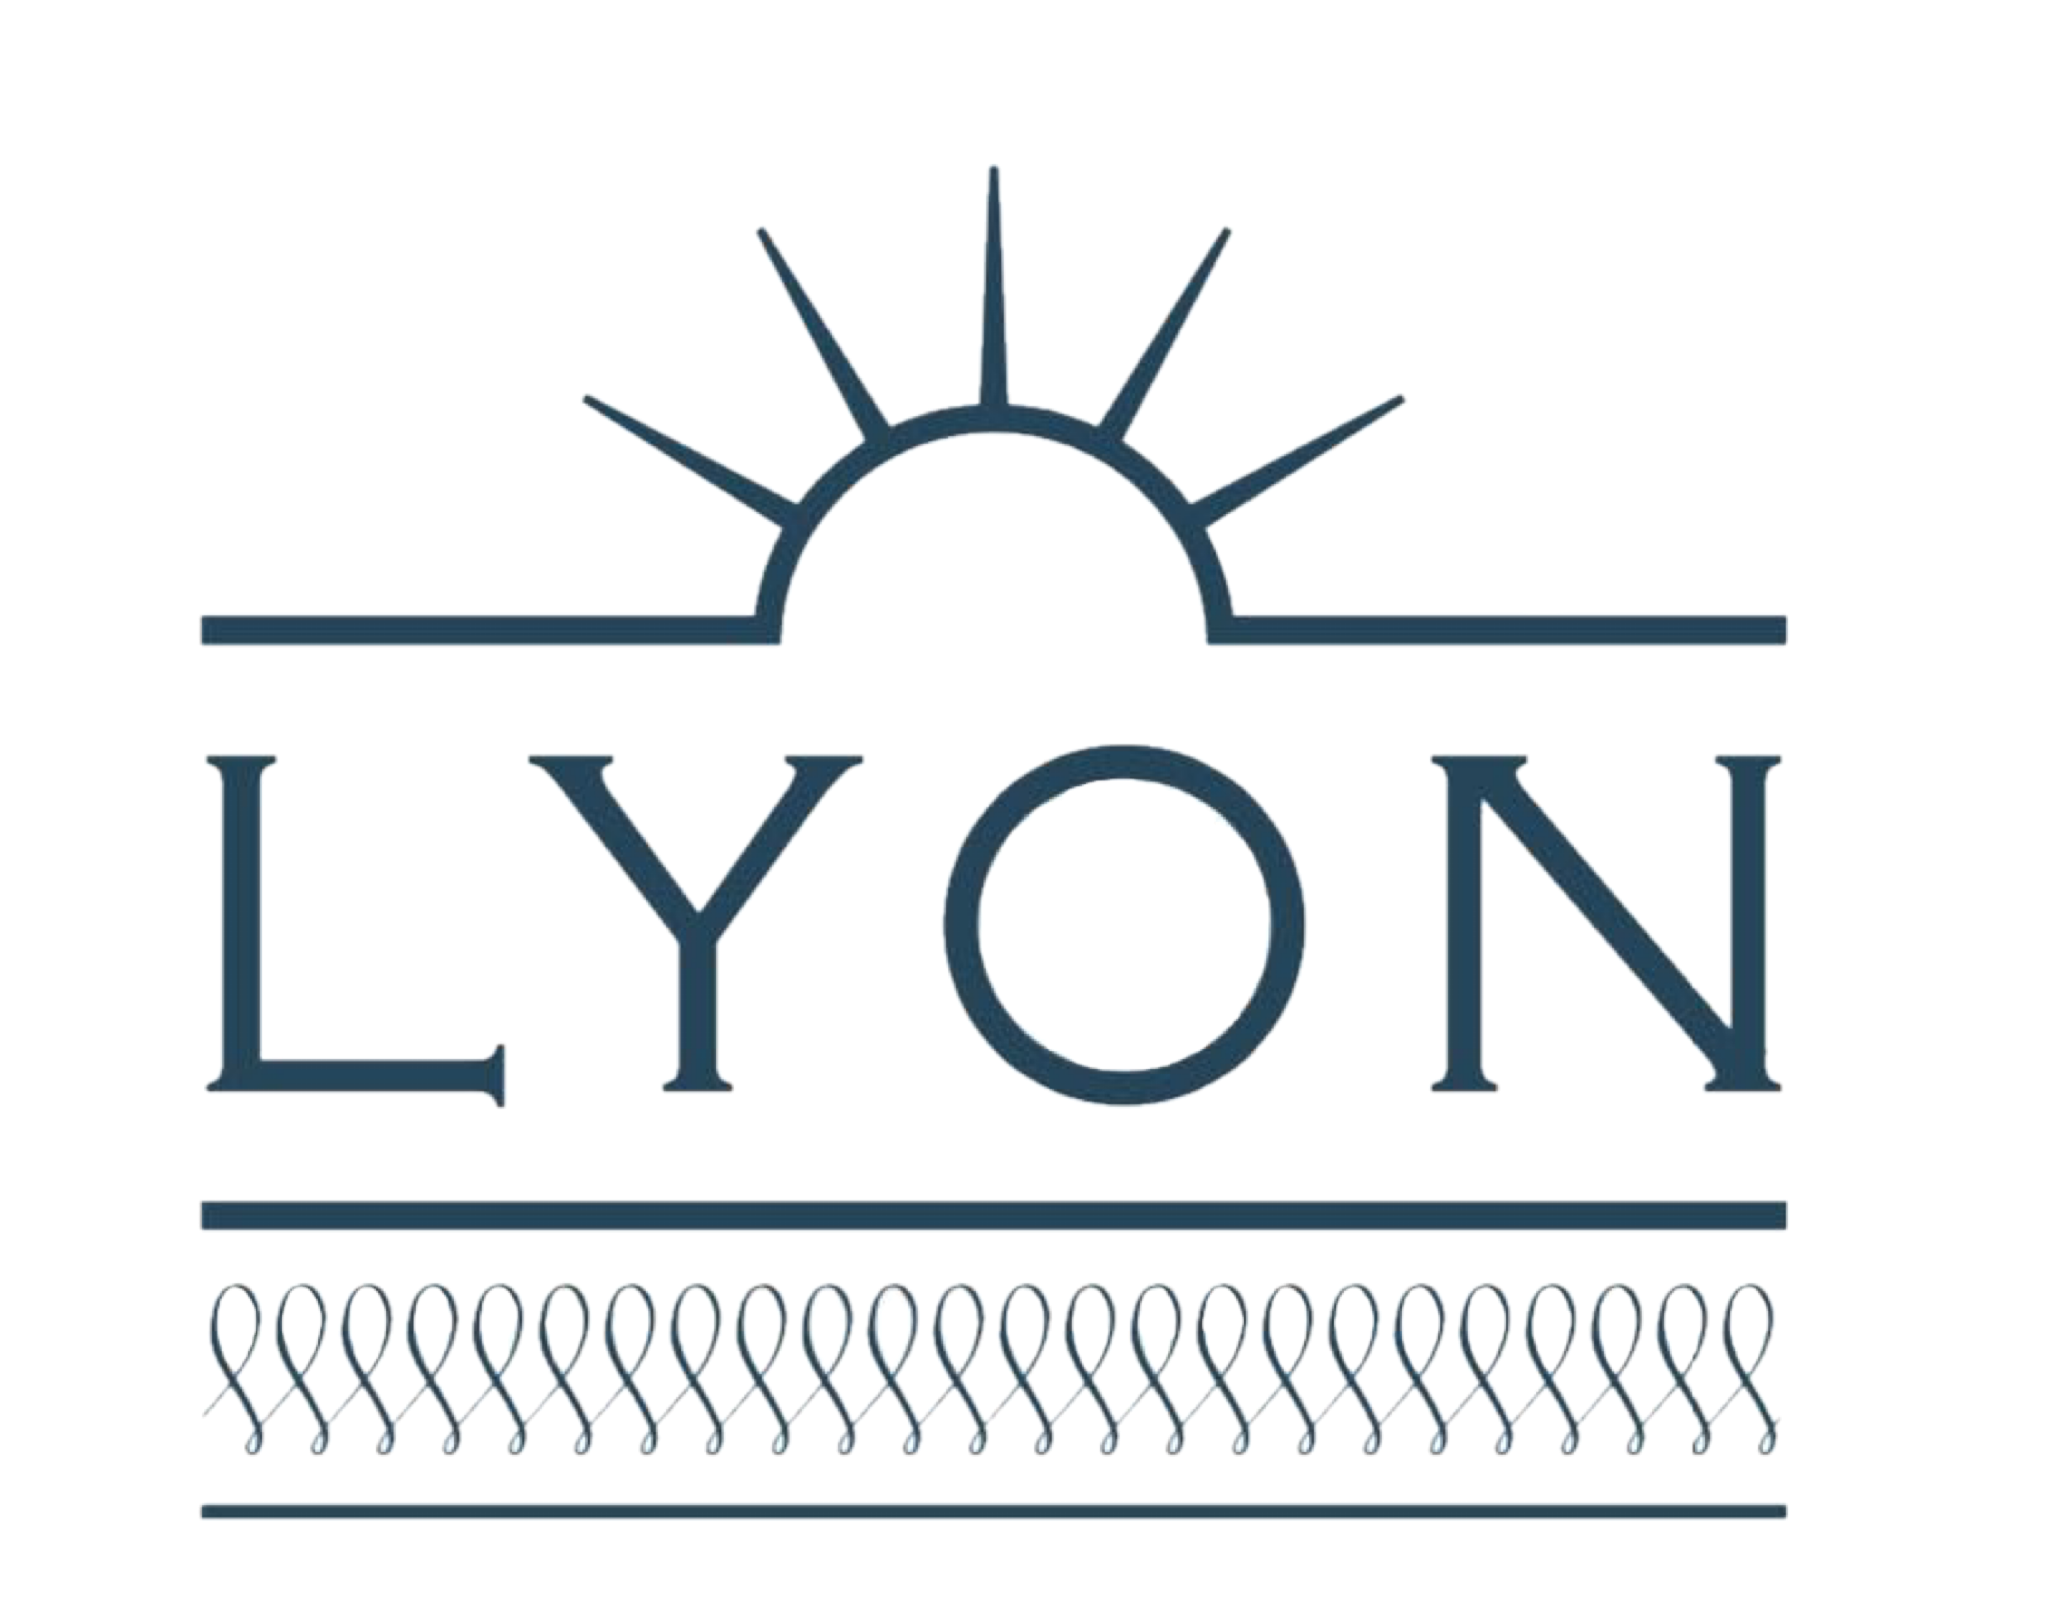 LYONoffical webshop